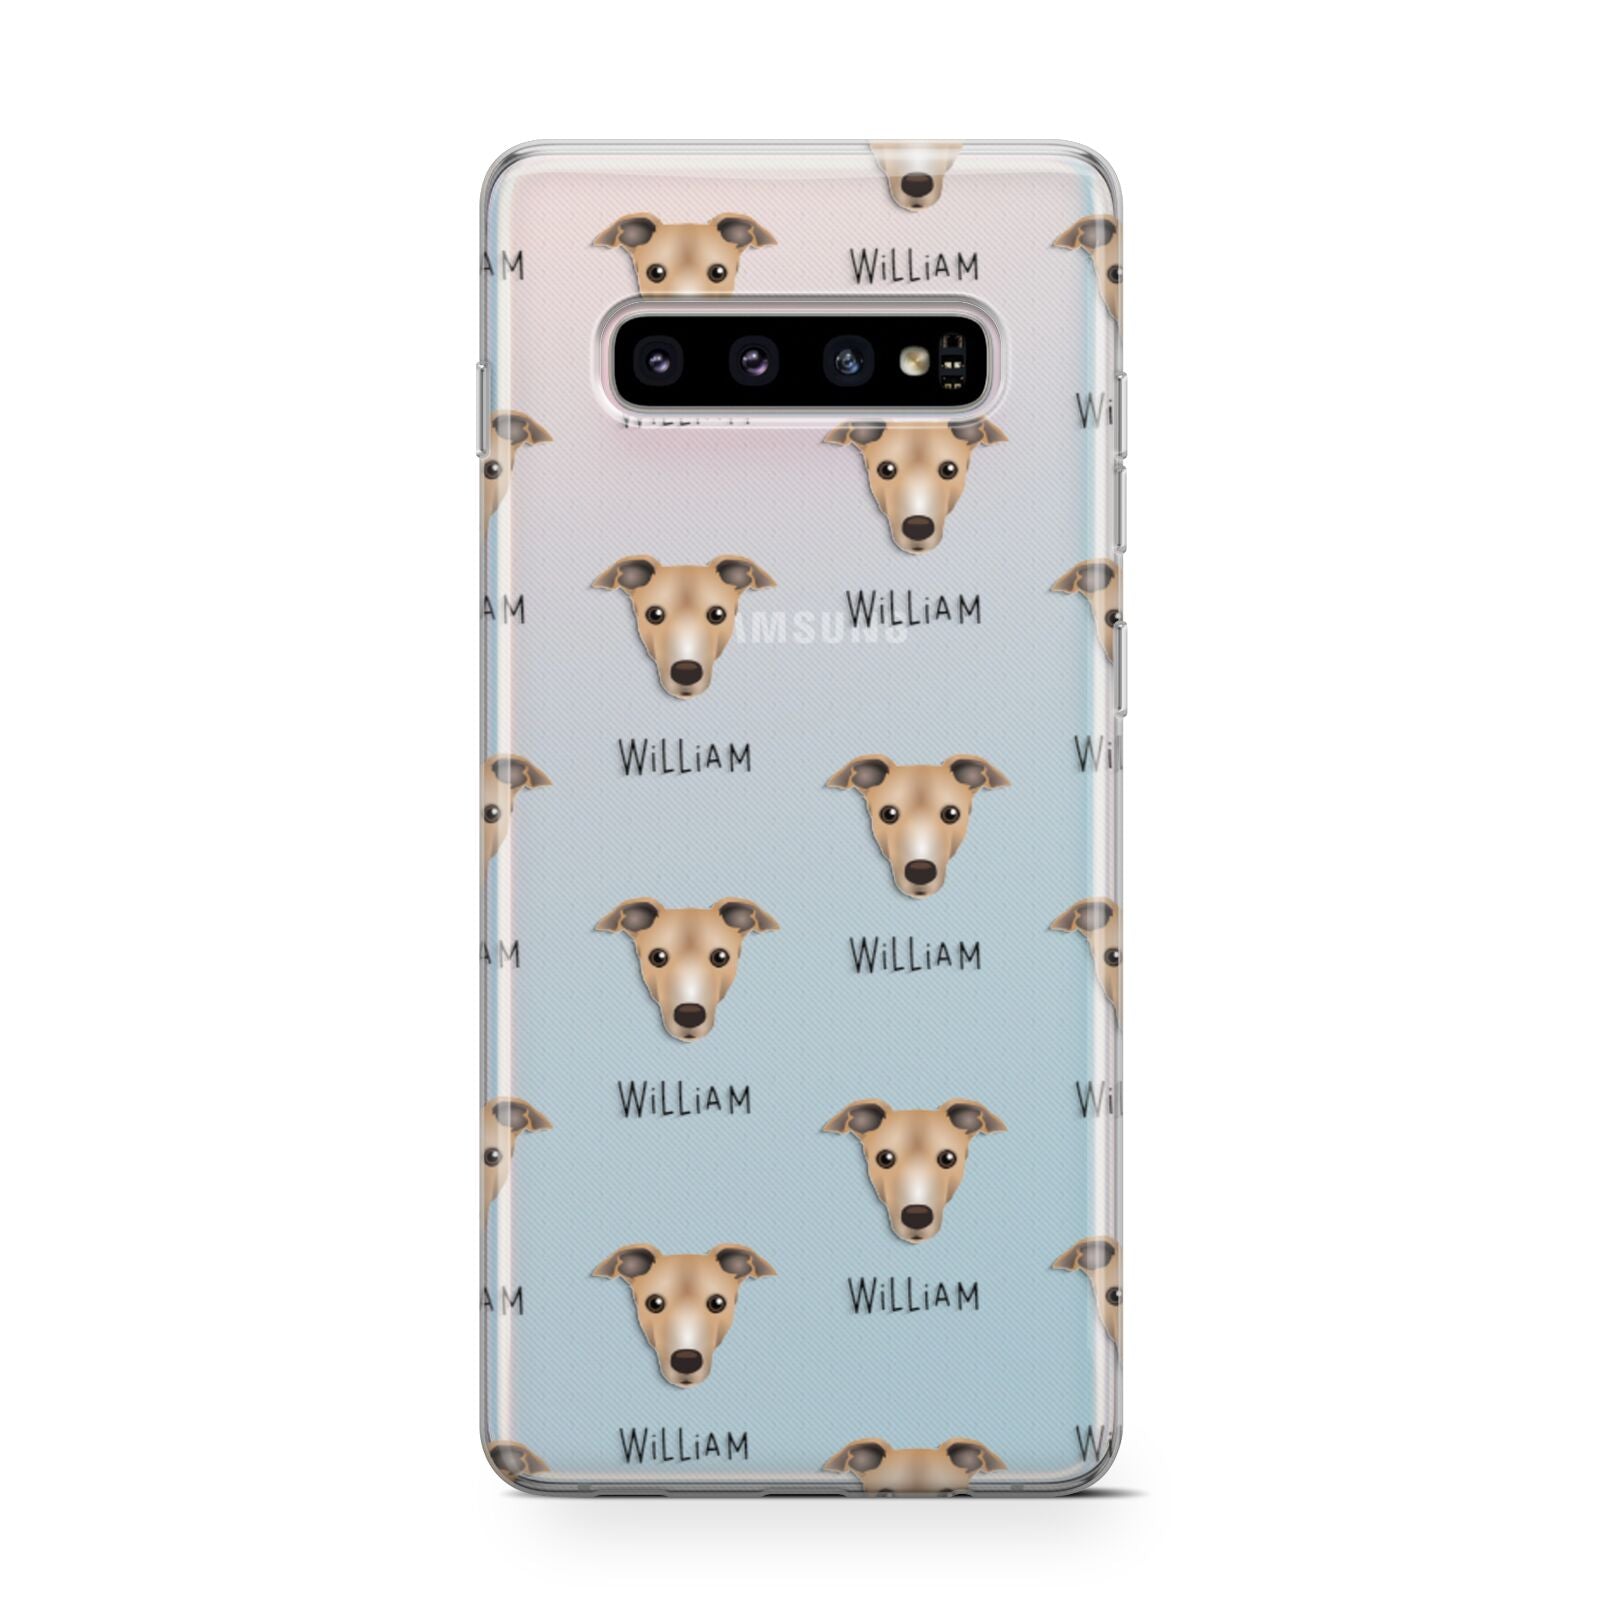 Italian Greyhound Icon with Name Samsung Galaxy S10 Case